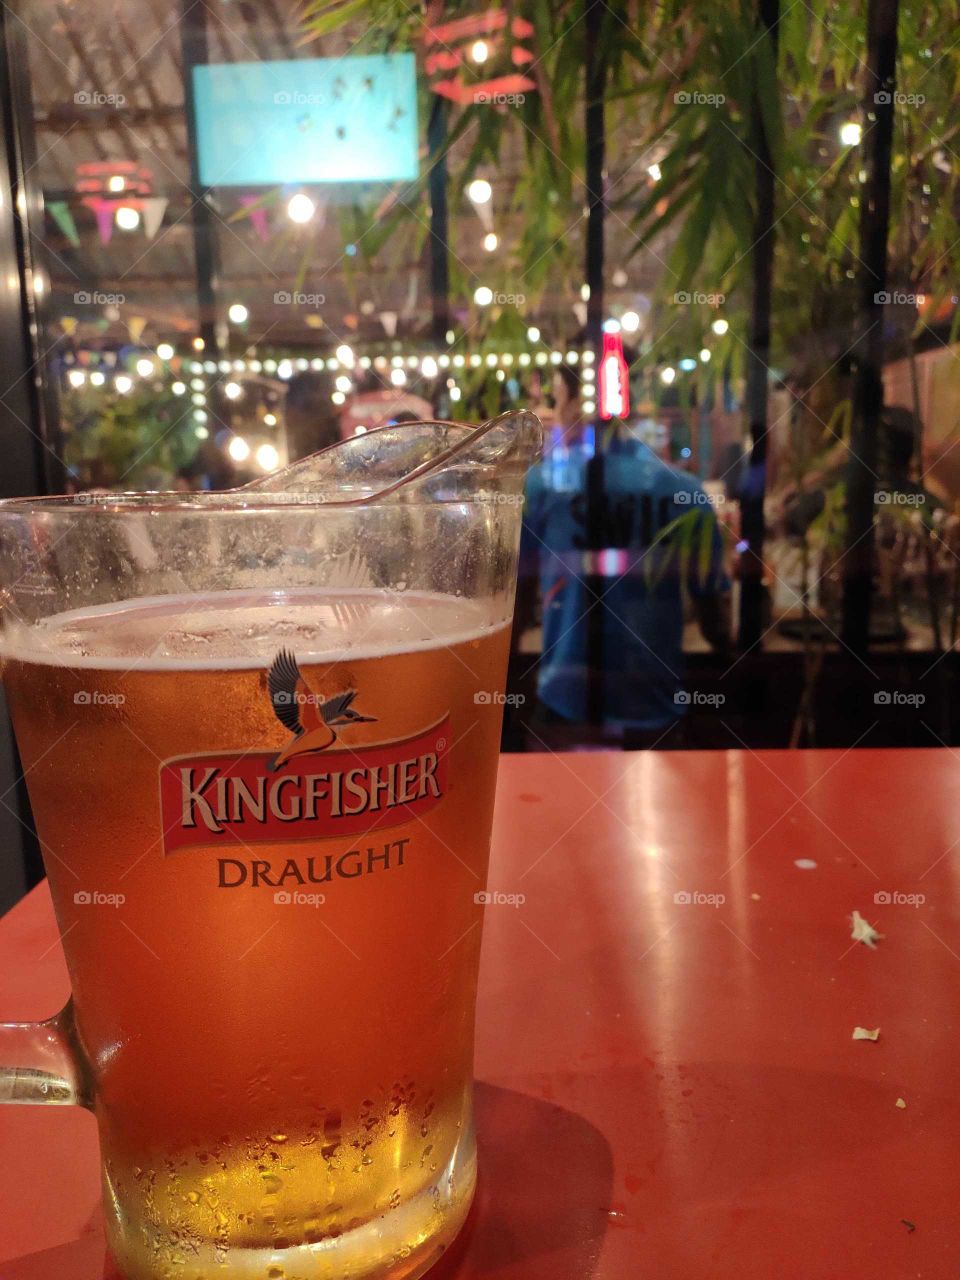 kingfisher draught beer. fresh brewed beer